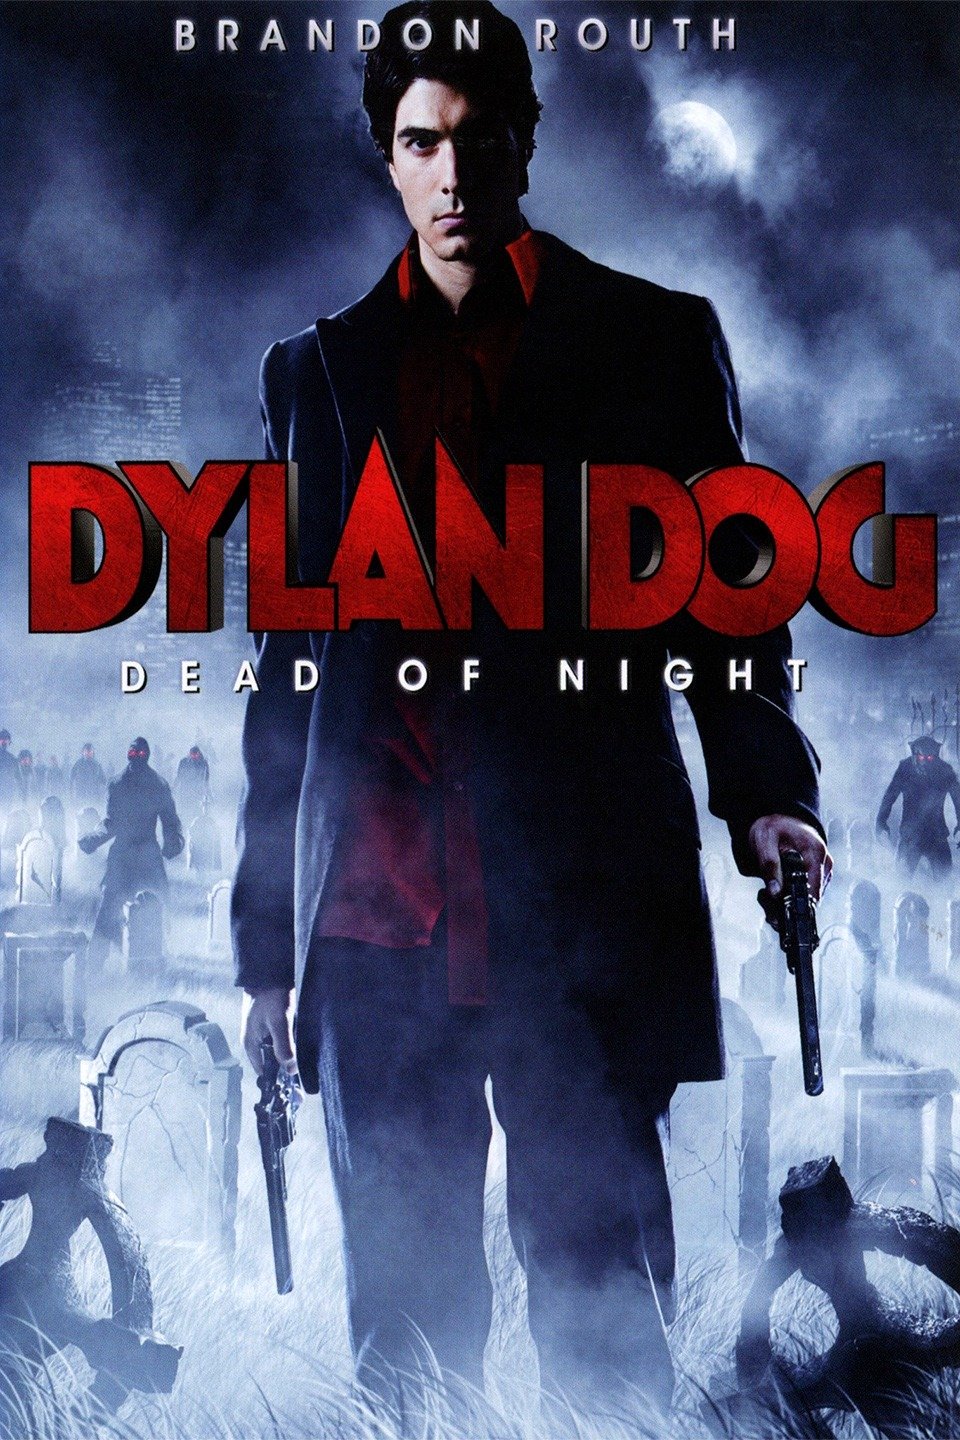 [MINI-HD] Dylan Dog: Dead of Night (2010) ฮีโร่รัตติกาล ถล่มมารหมู่อสูร [1080p] [พากย์ไทย 5.1 + อังกฤษ 5.1] [บรรยายไทย + อังกฤษ] [เสียงไทย + ซับไทย] [ONE2UP]